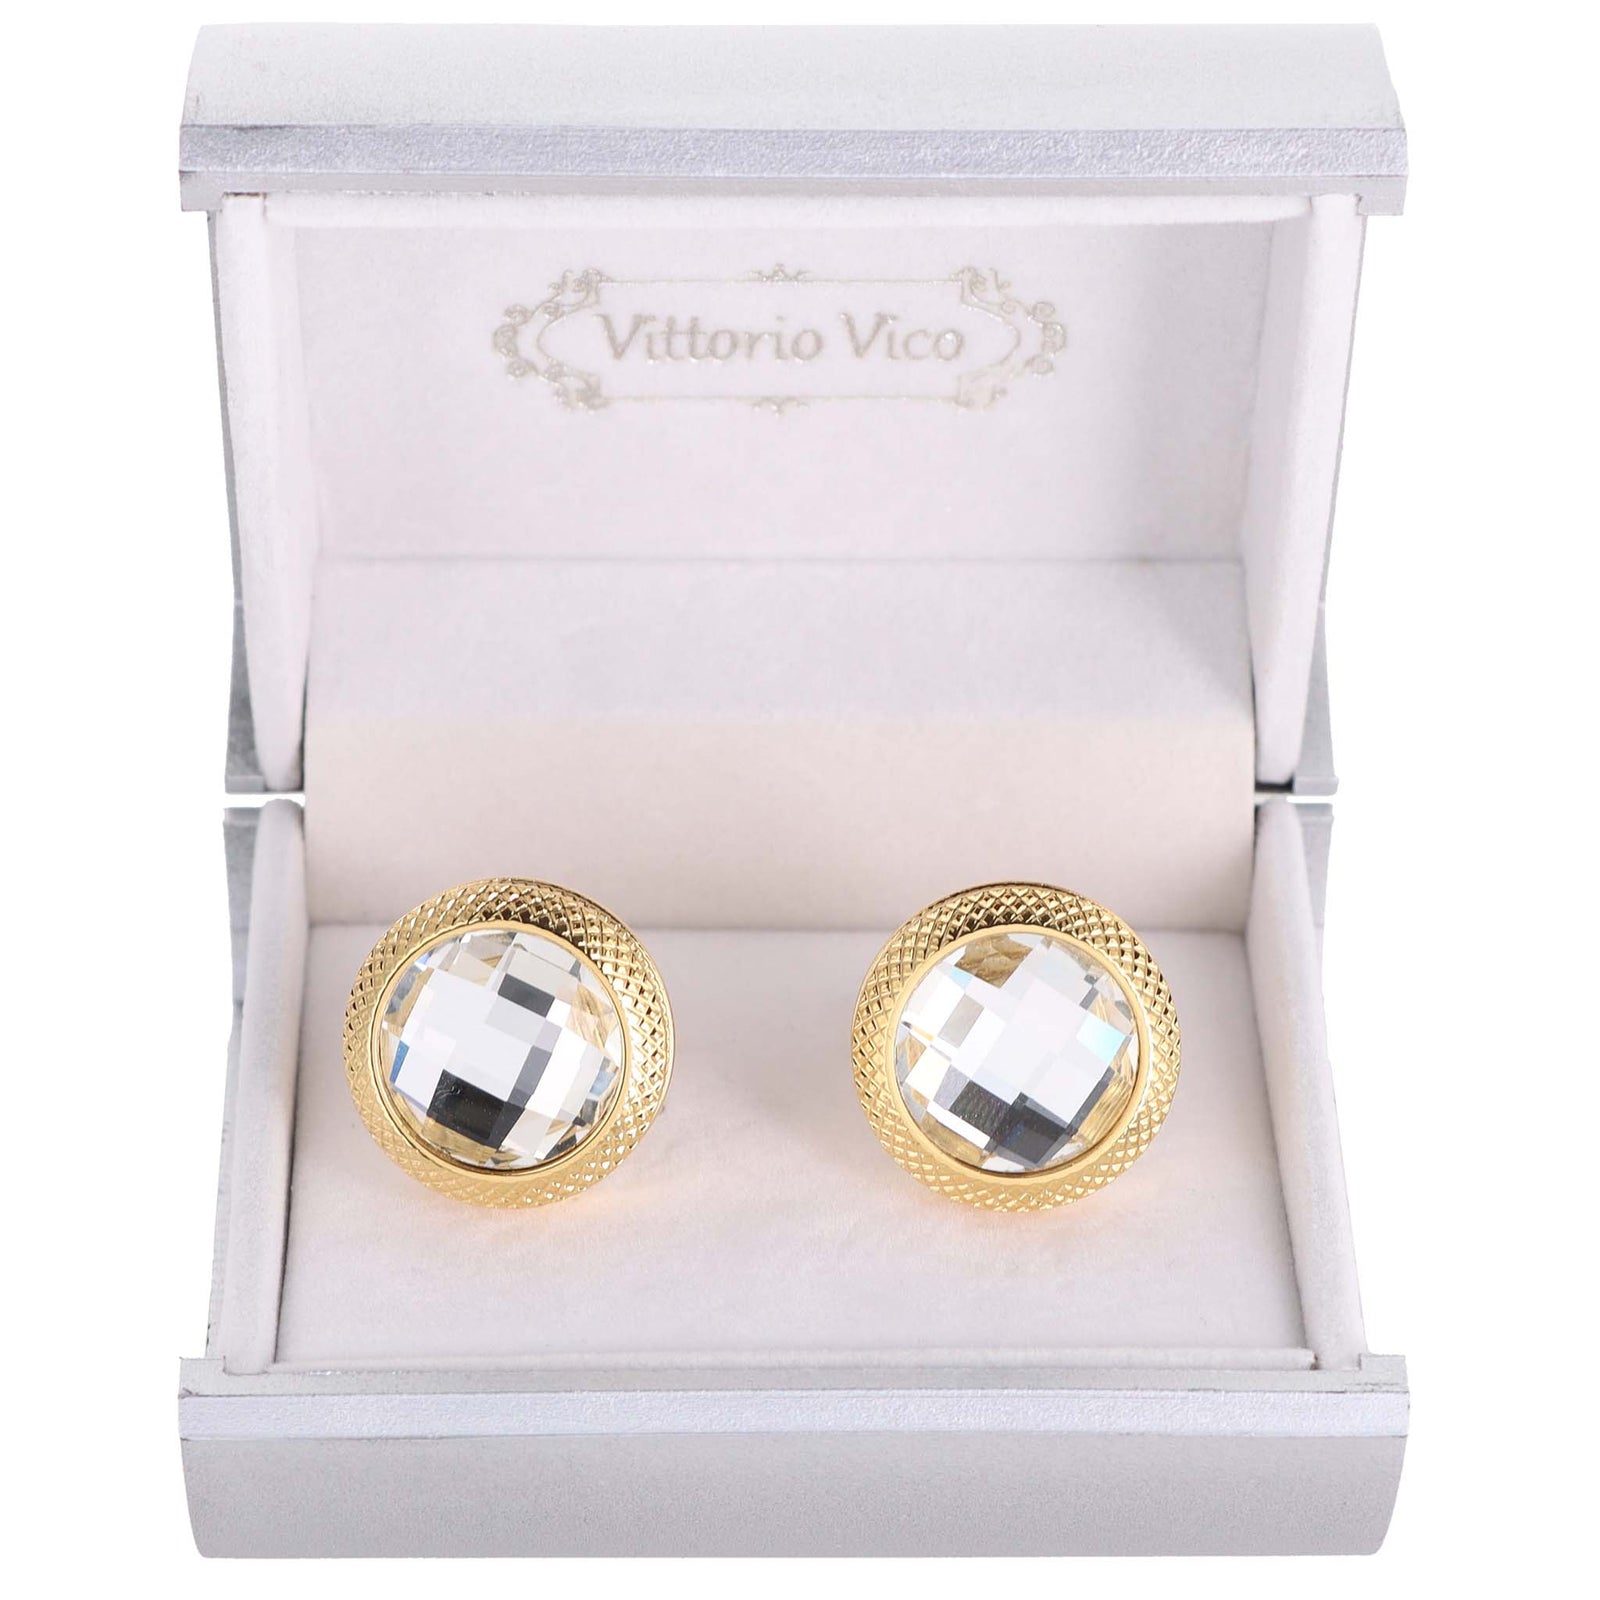 VITTORIO VICO Gold & Silver Colorful Button Cufflinks (CL18XX Series)